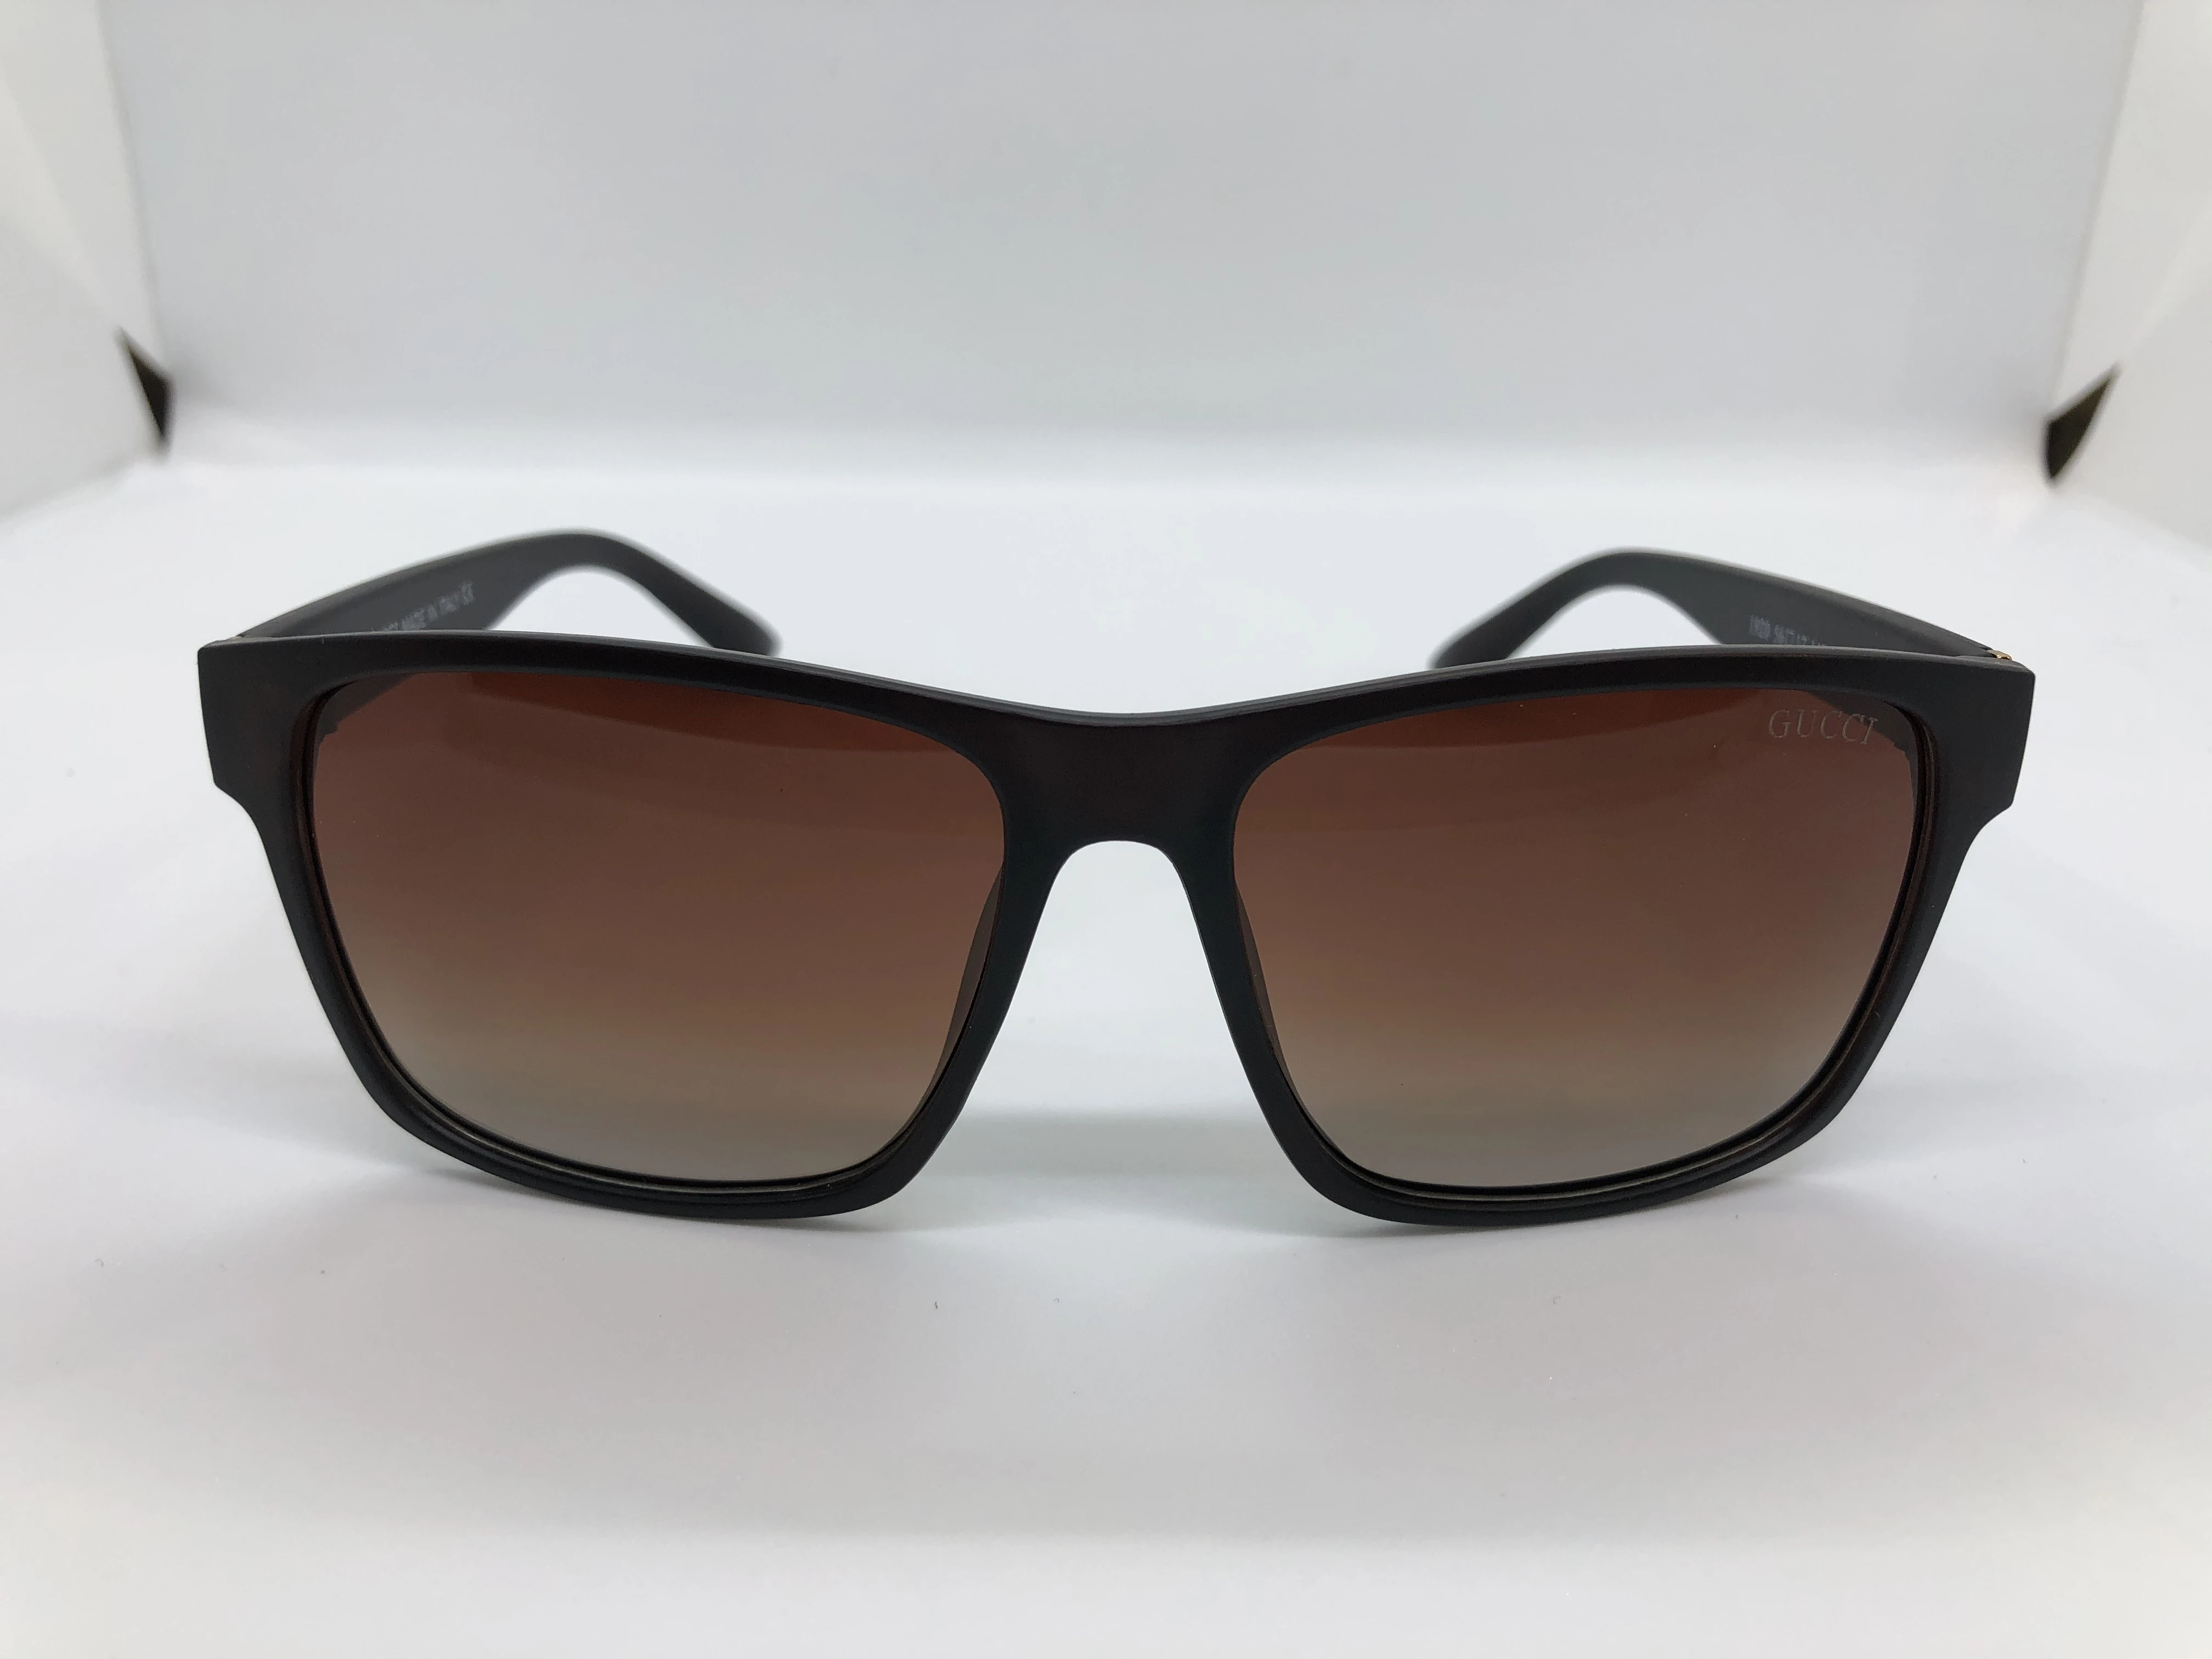 Gucci sunglasses - dark brown polycarbonate frame - dark brown gradient lenses - dark brown polycarbonate sunglasses - golden logo - men